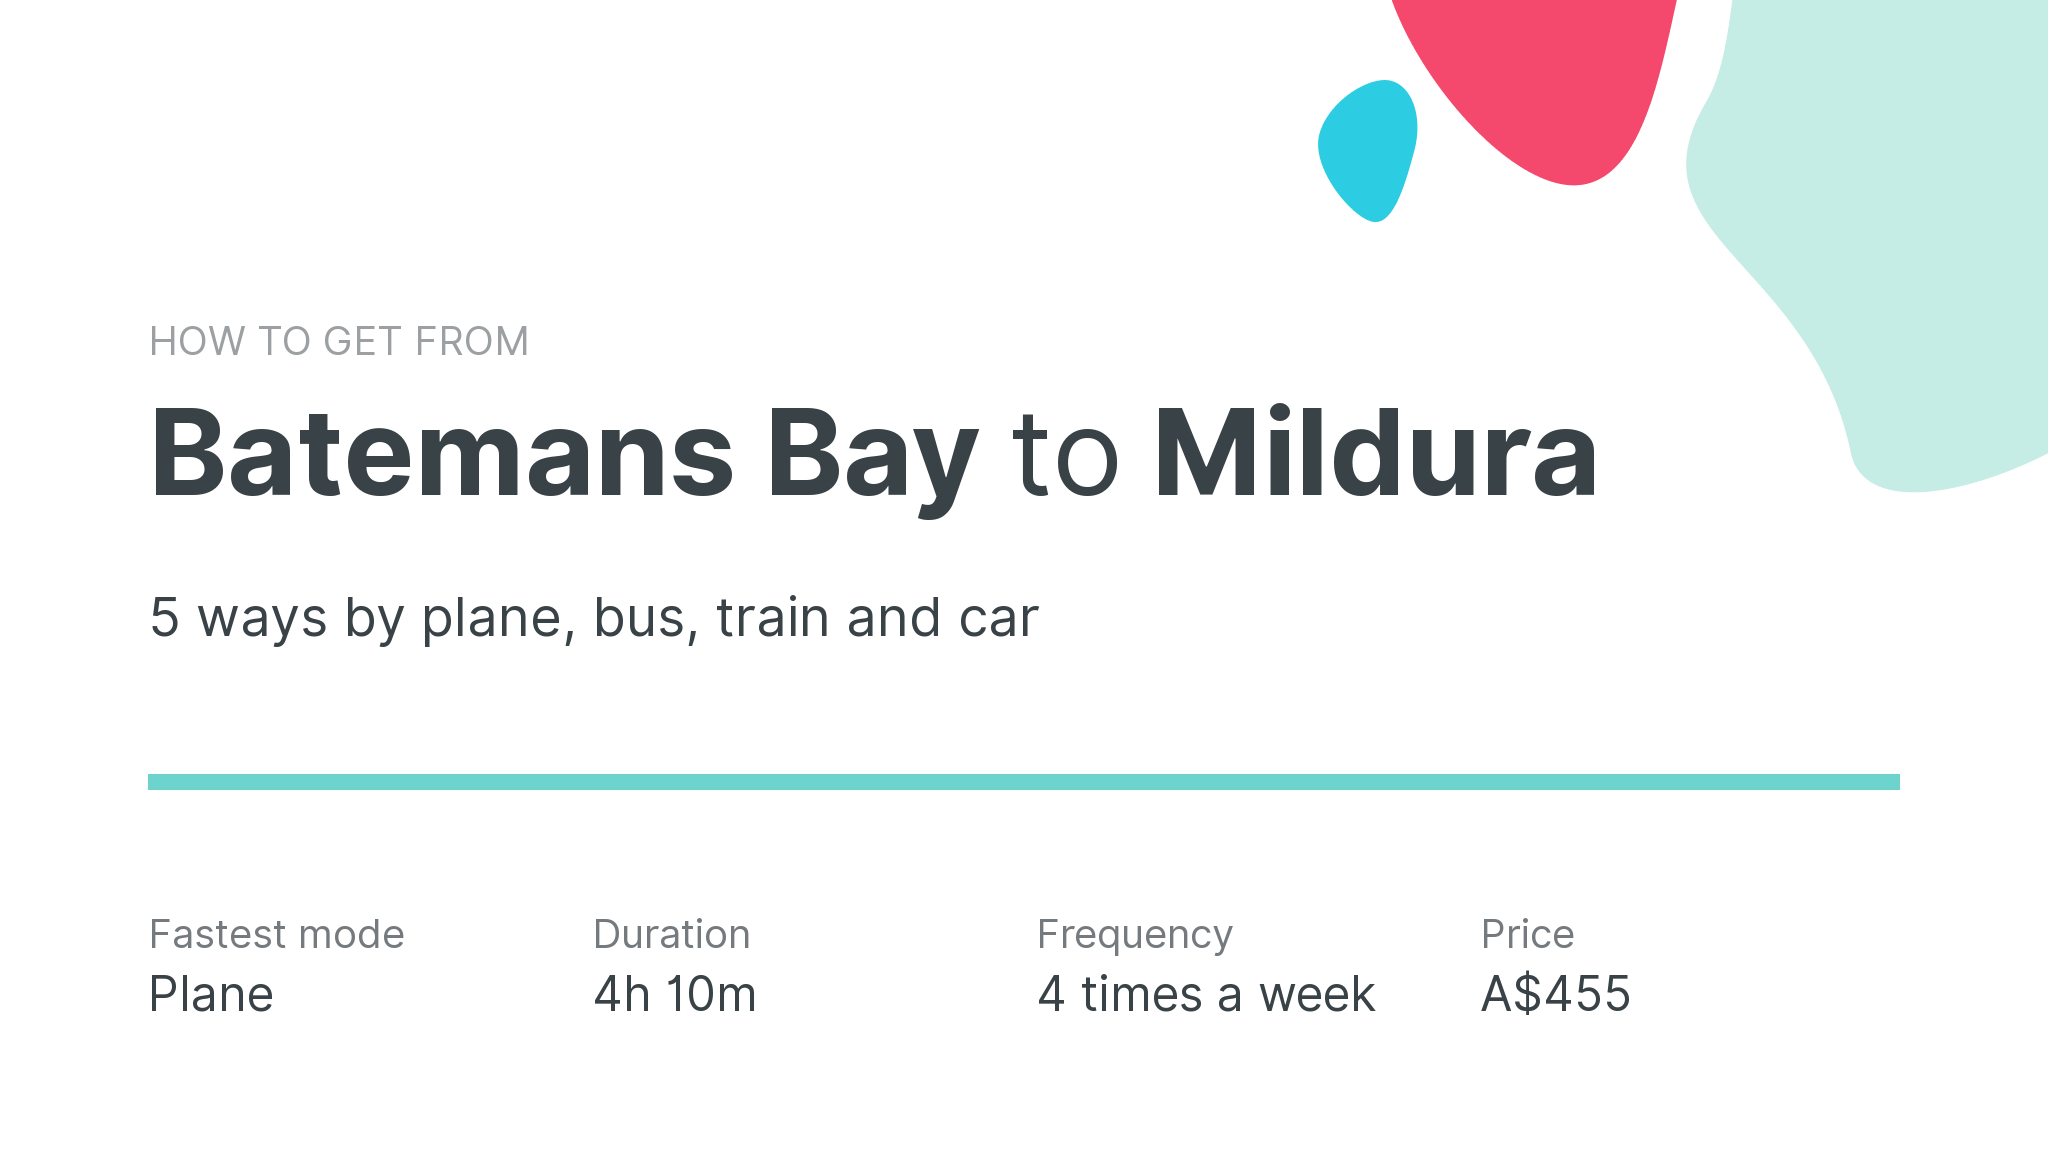 How do I get from Batemans Bay to Mildura